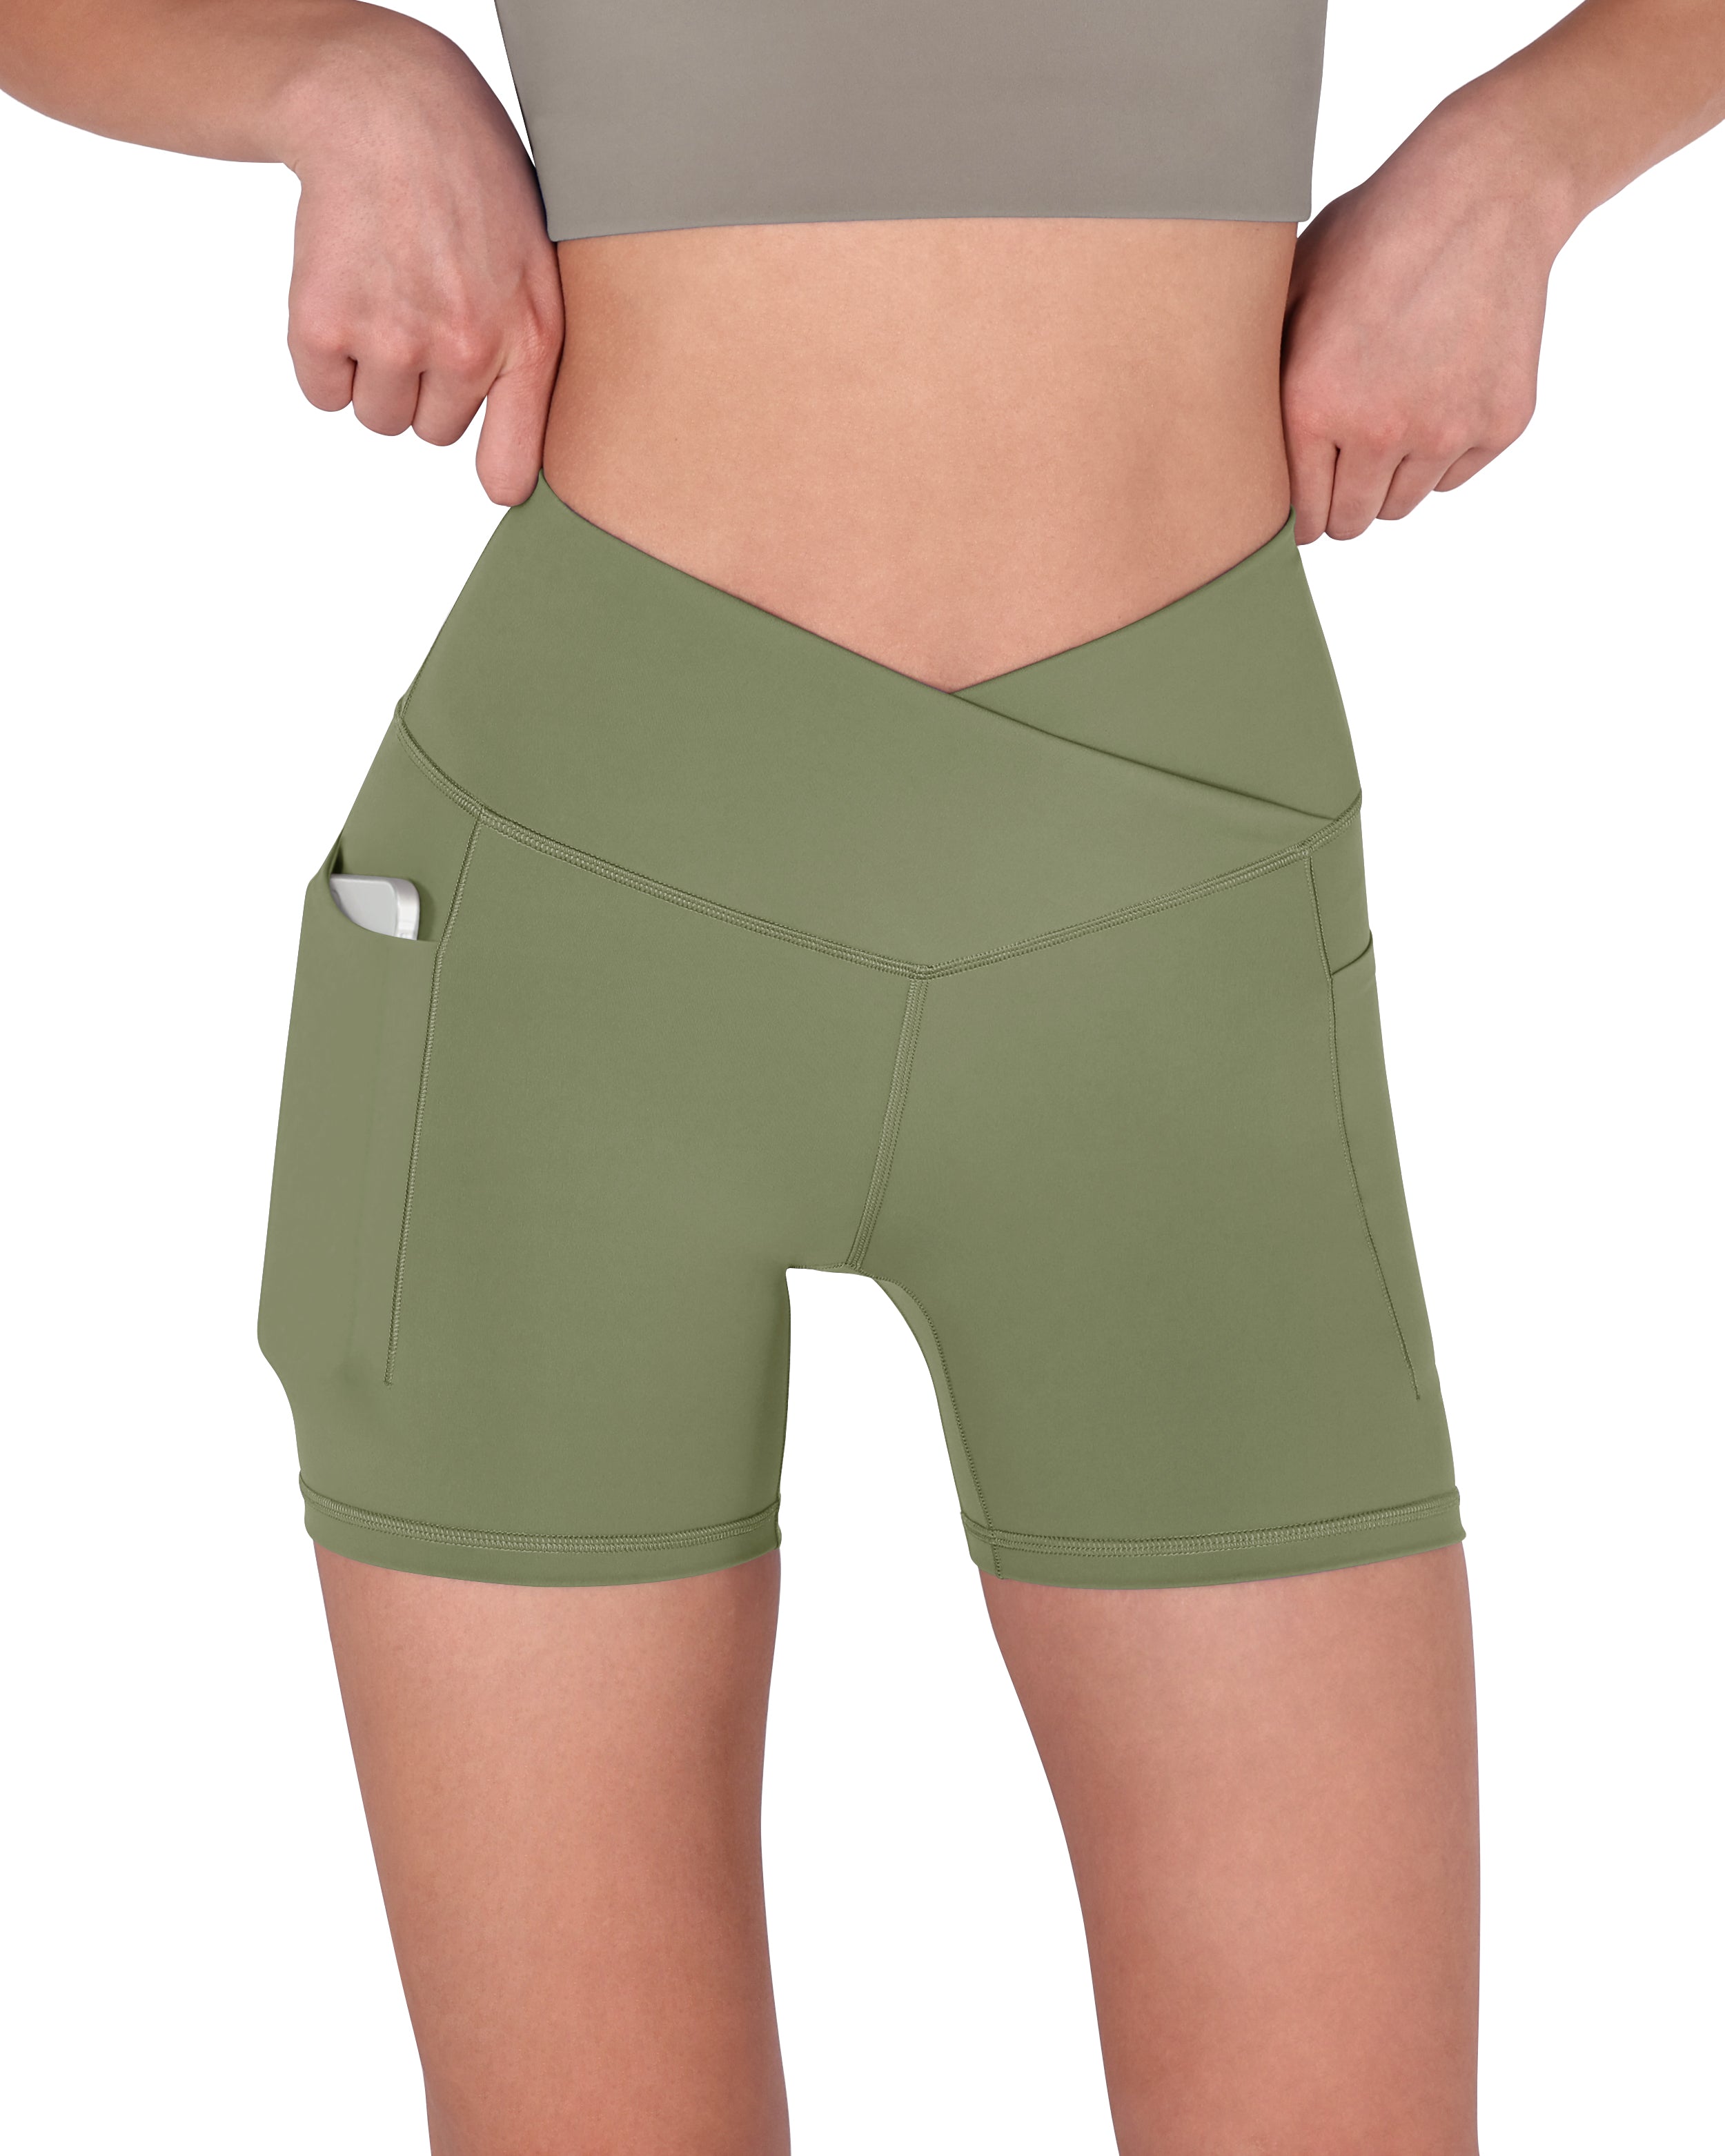 5" Cross Waist Biker Shorts with Pockets Dark Olive - ododos